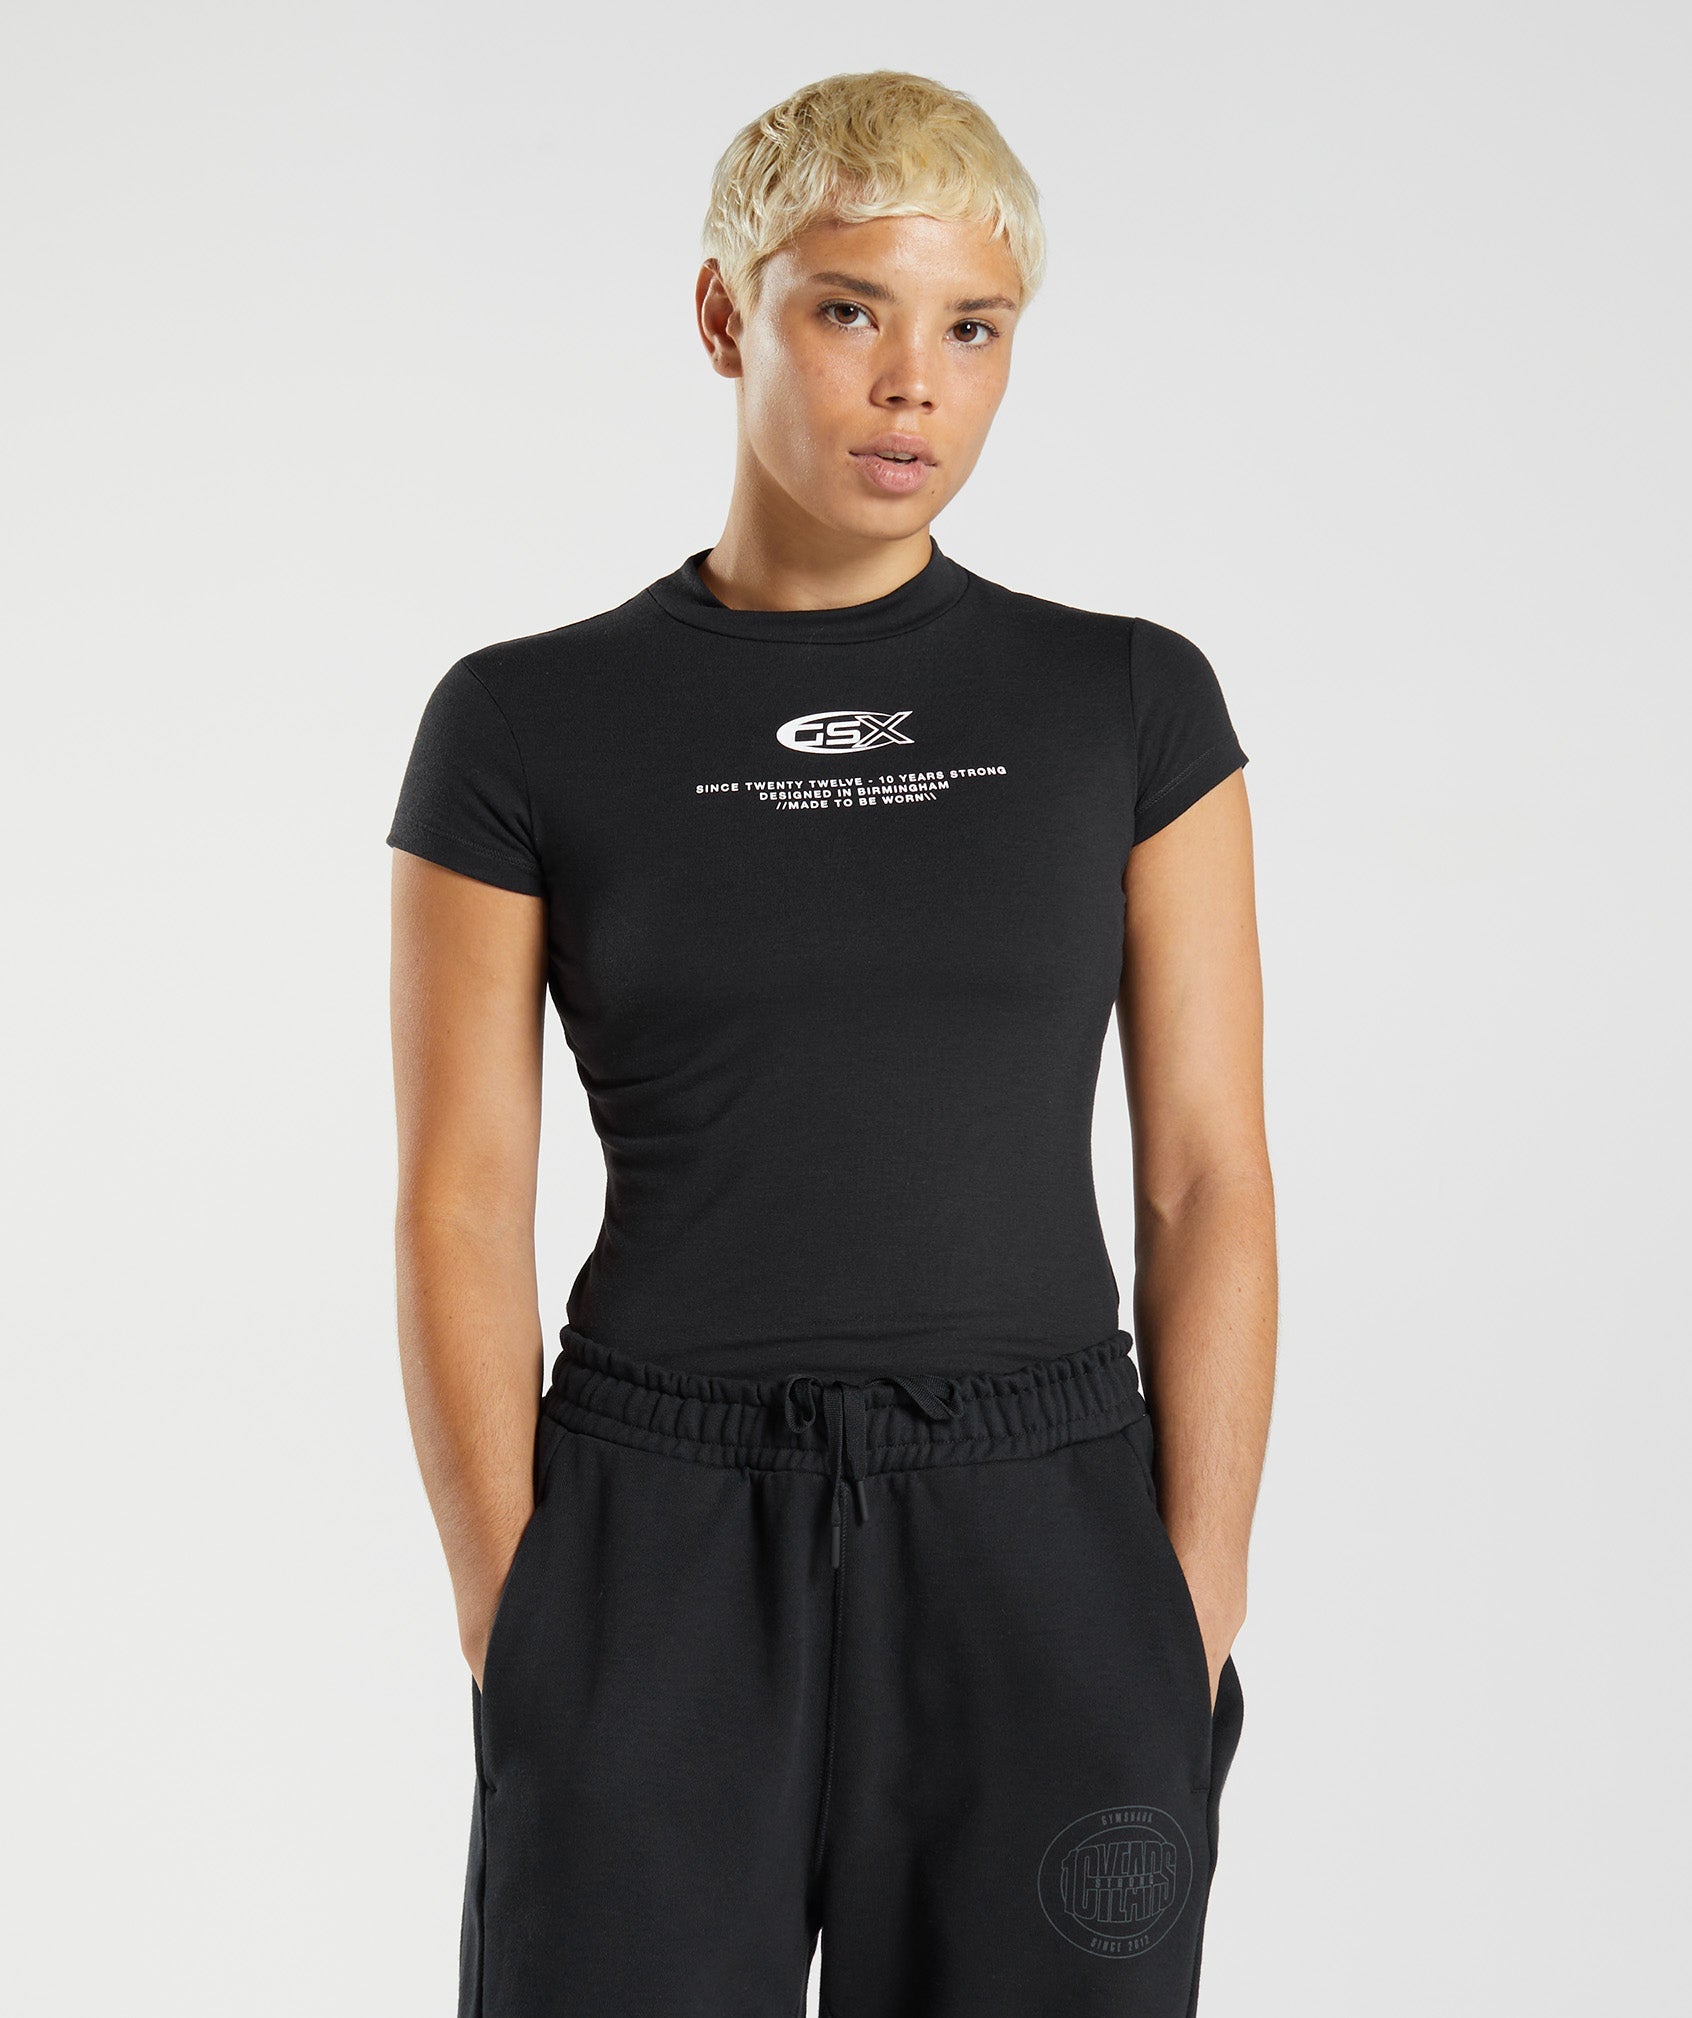 Gymshark GS10 Year Body Fit T-Shirt - Black | Gymshark